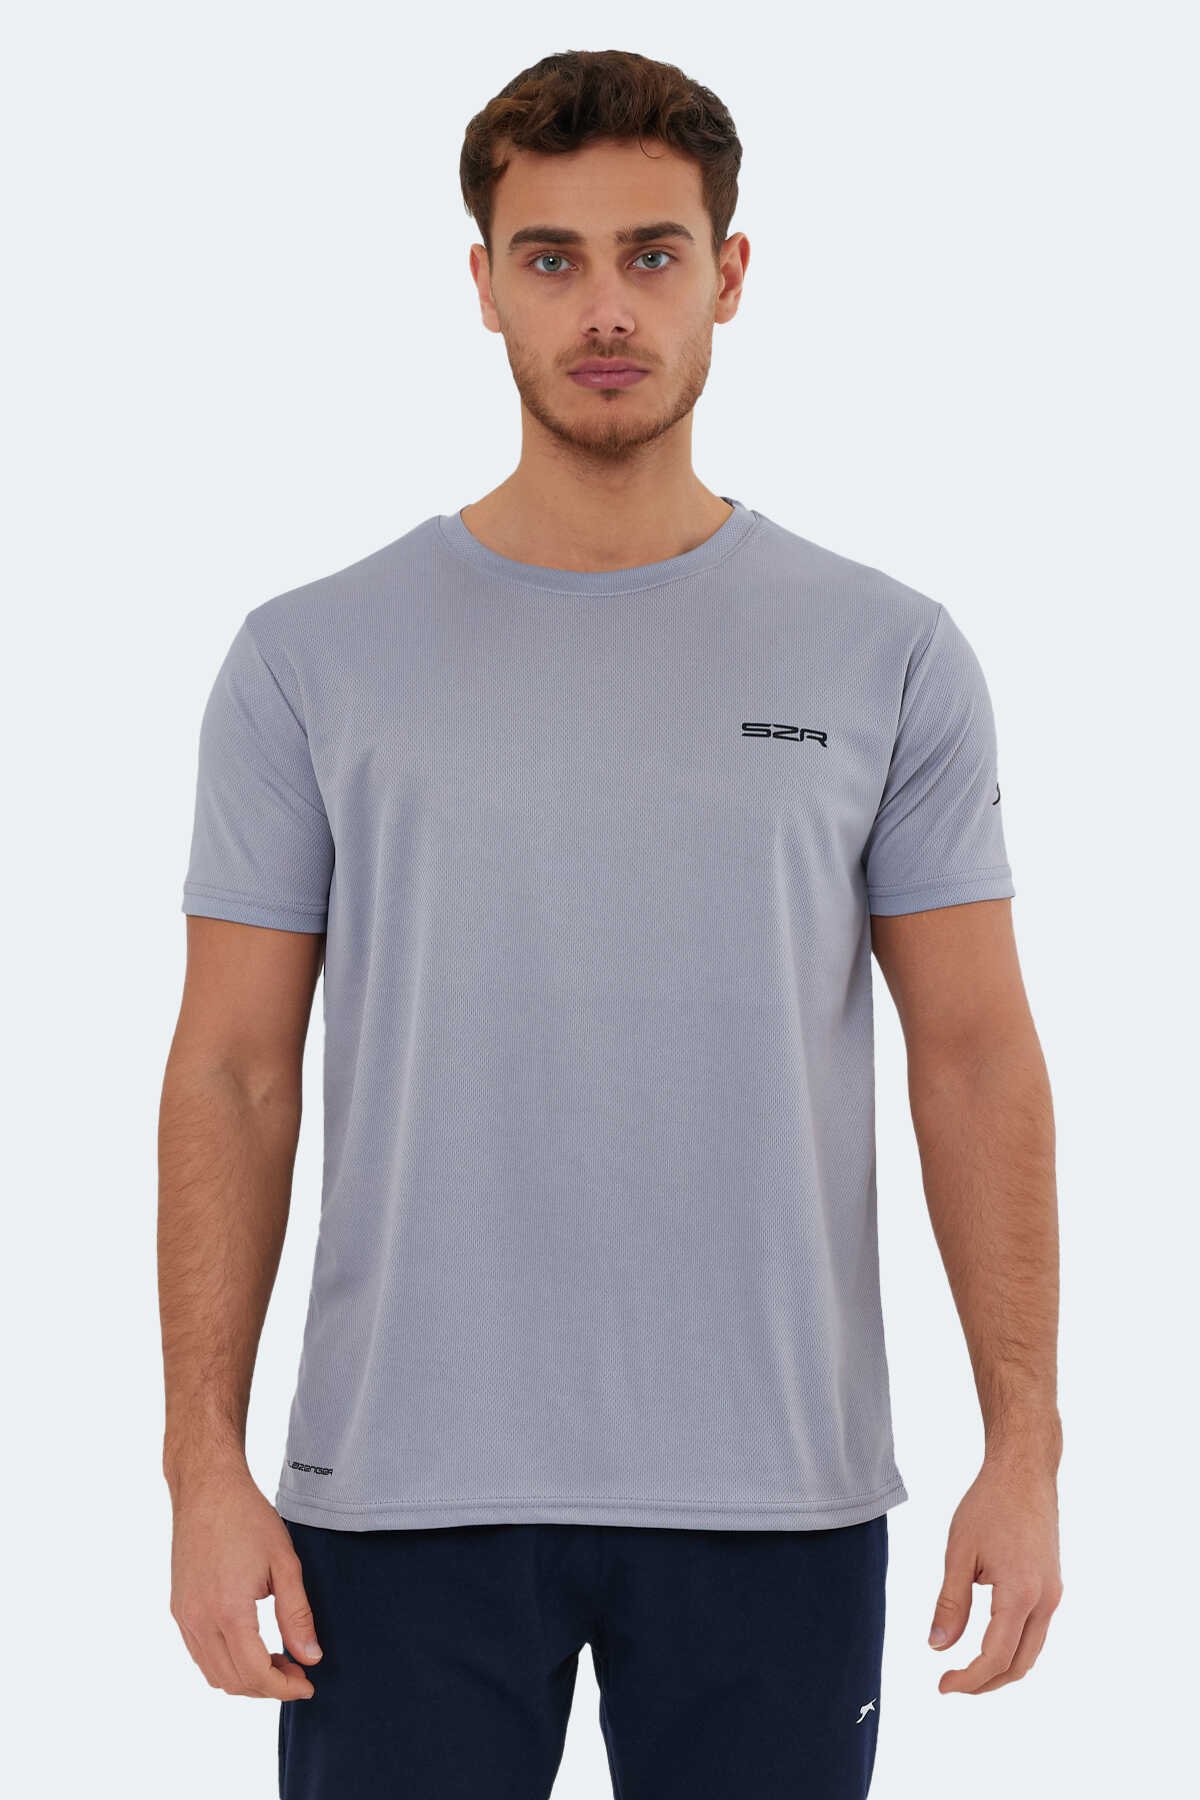 Slazenger - Slazenger OMAR KTN Erkek Kısa Kol T-Shirt Açık Gri